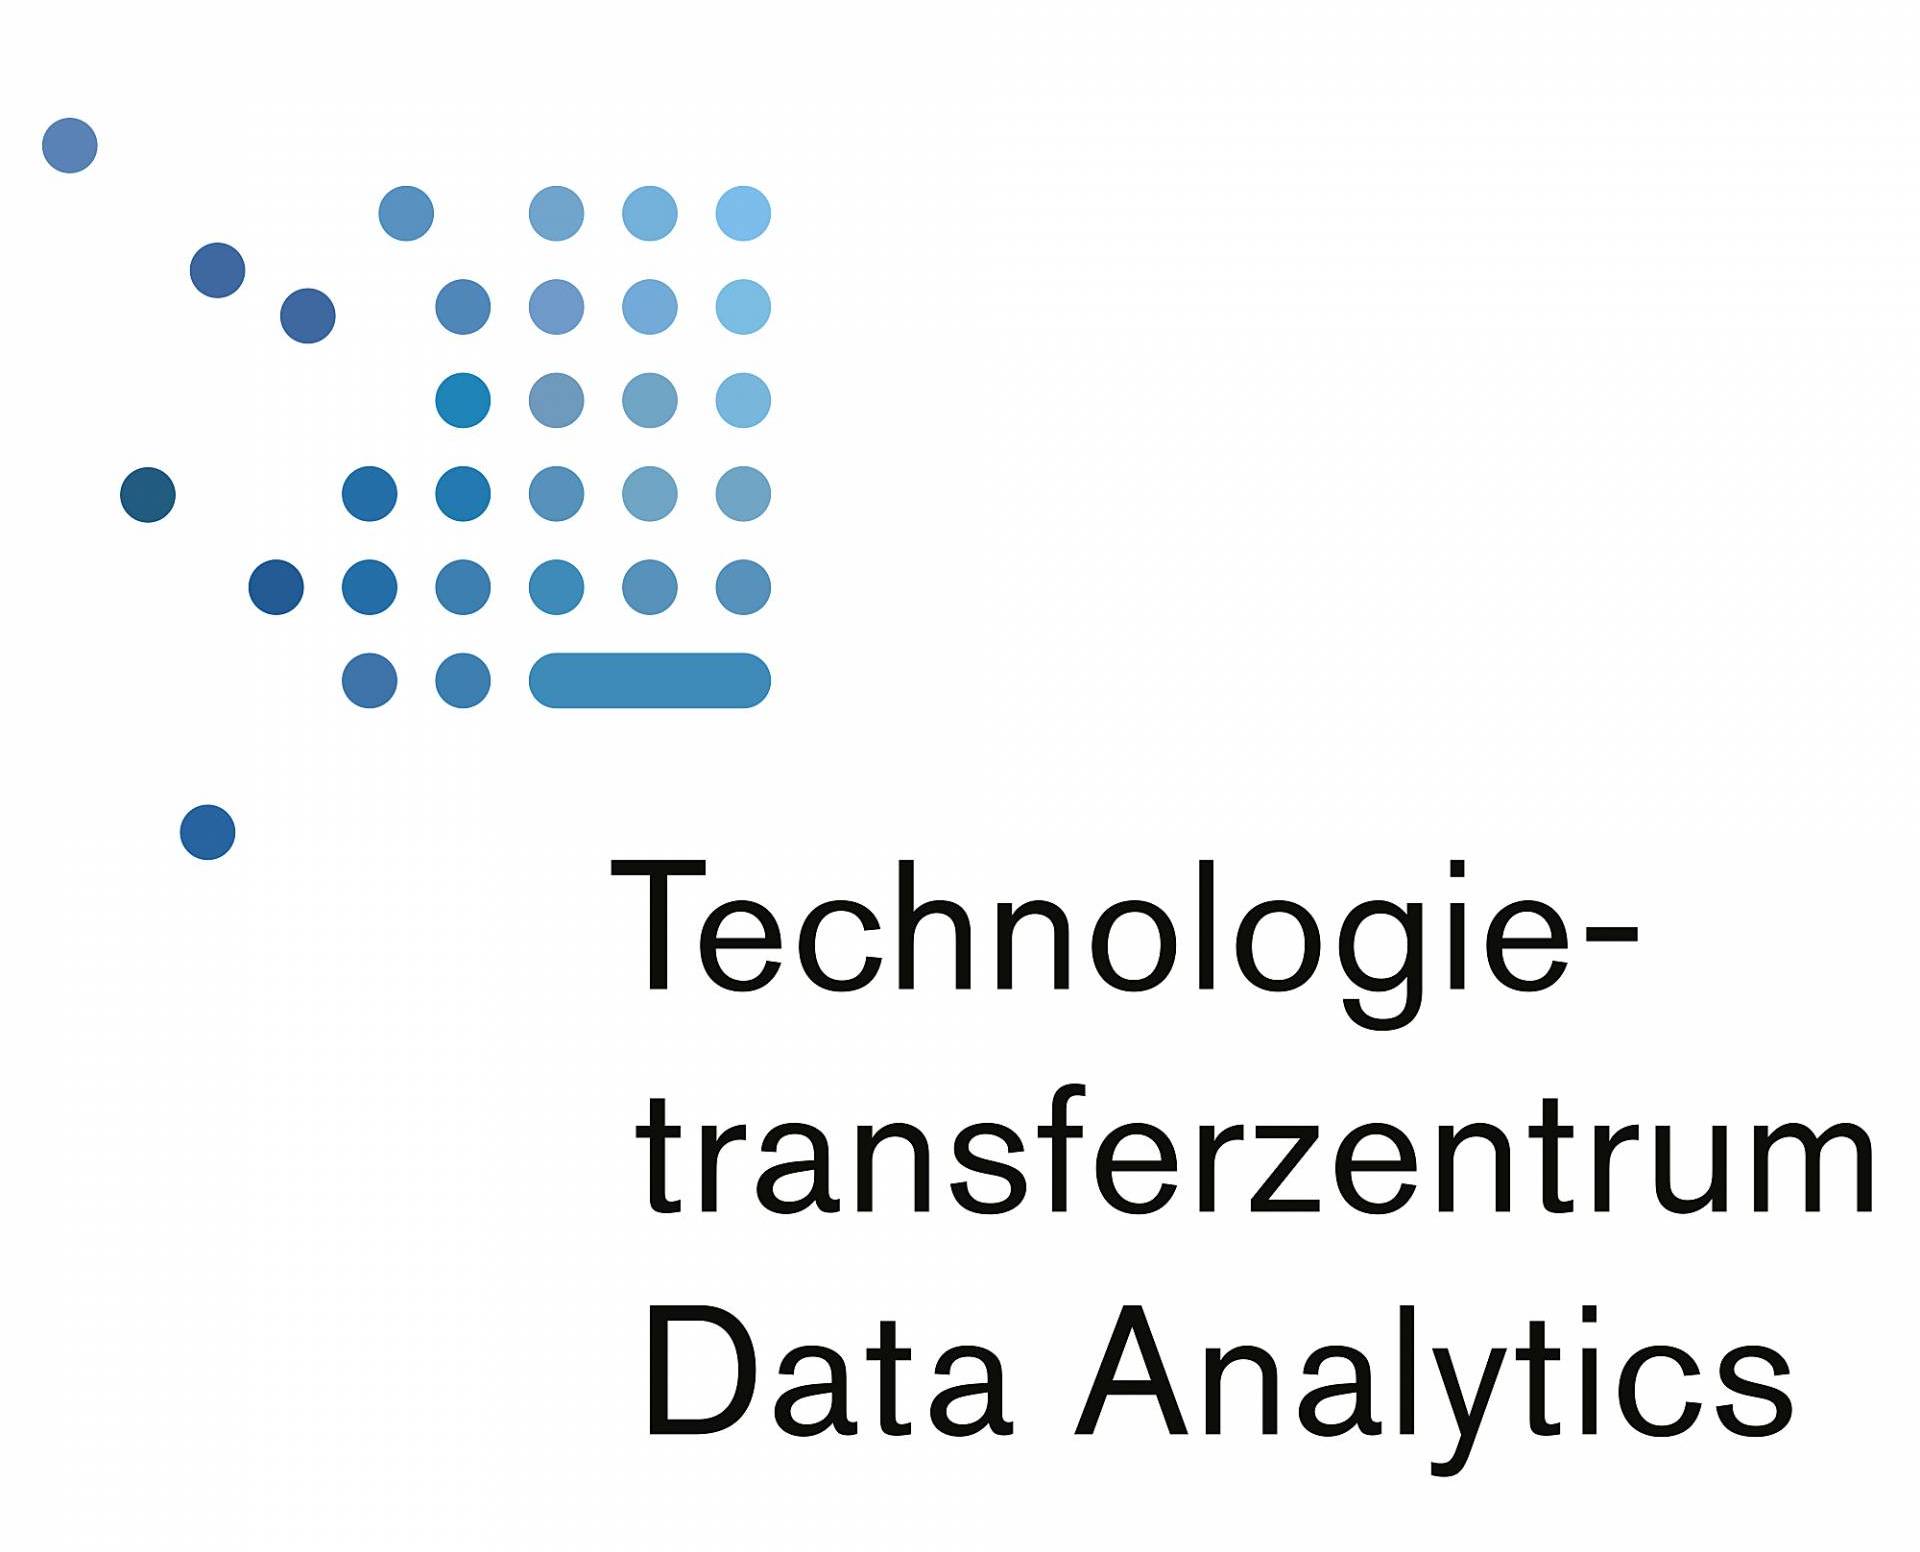 Data Analytics im Donau-Ries im TTZ in Donauwörth